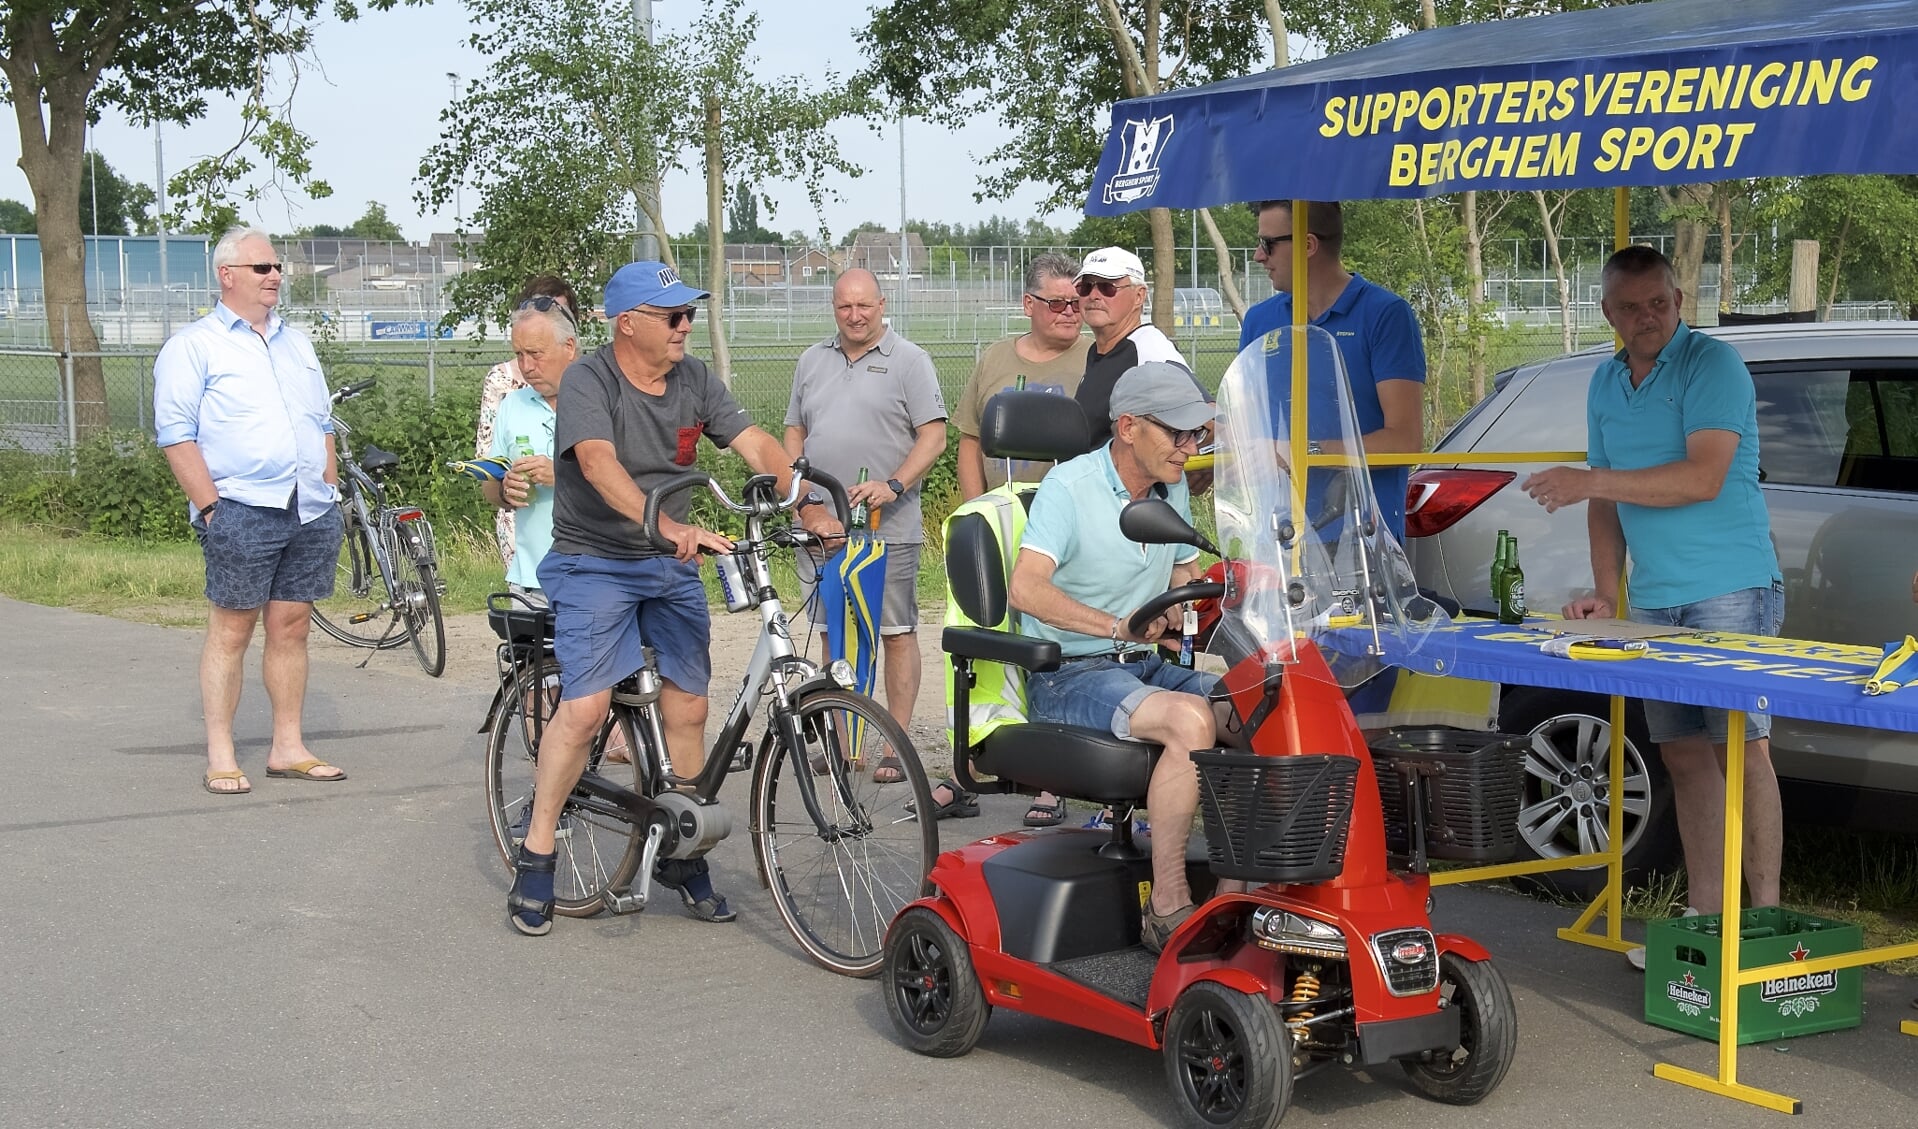 'Drive-thru bedanksessie' voor vrijwilligers Berghem Sport. (Foto: Ad Megens)